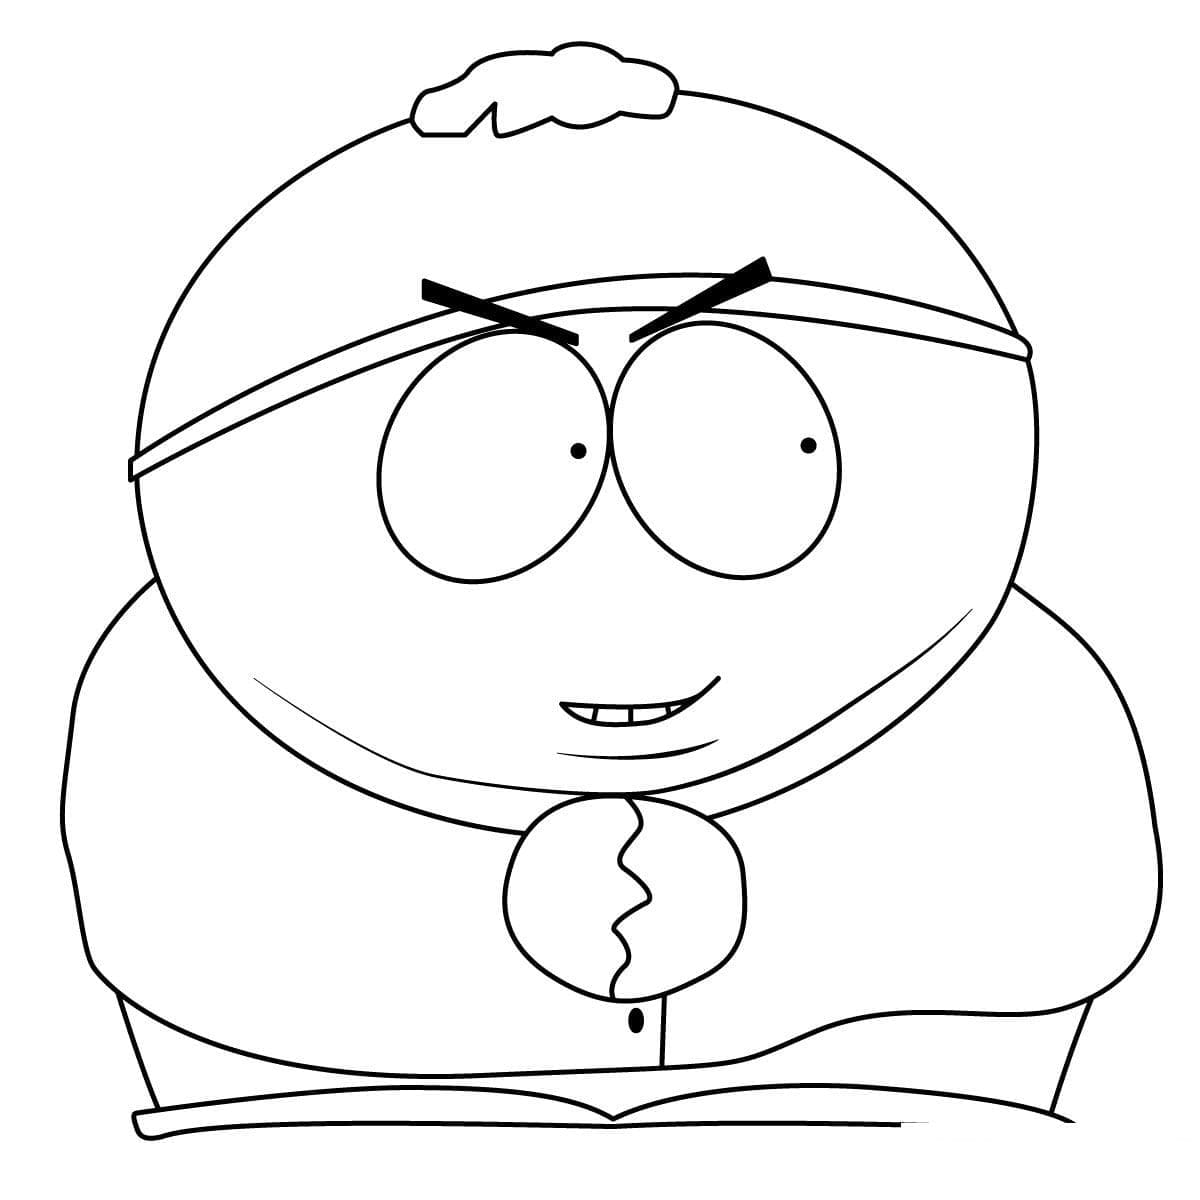 Coloriage Eric Cartman de South Park